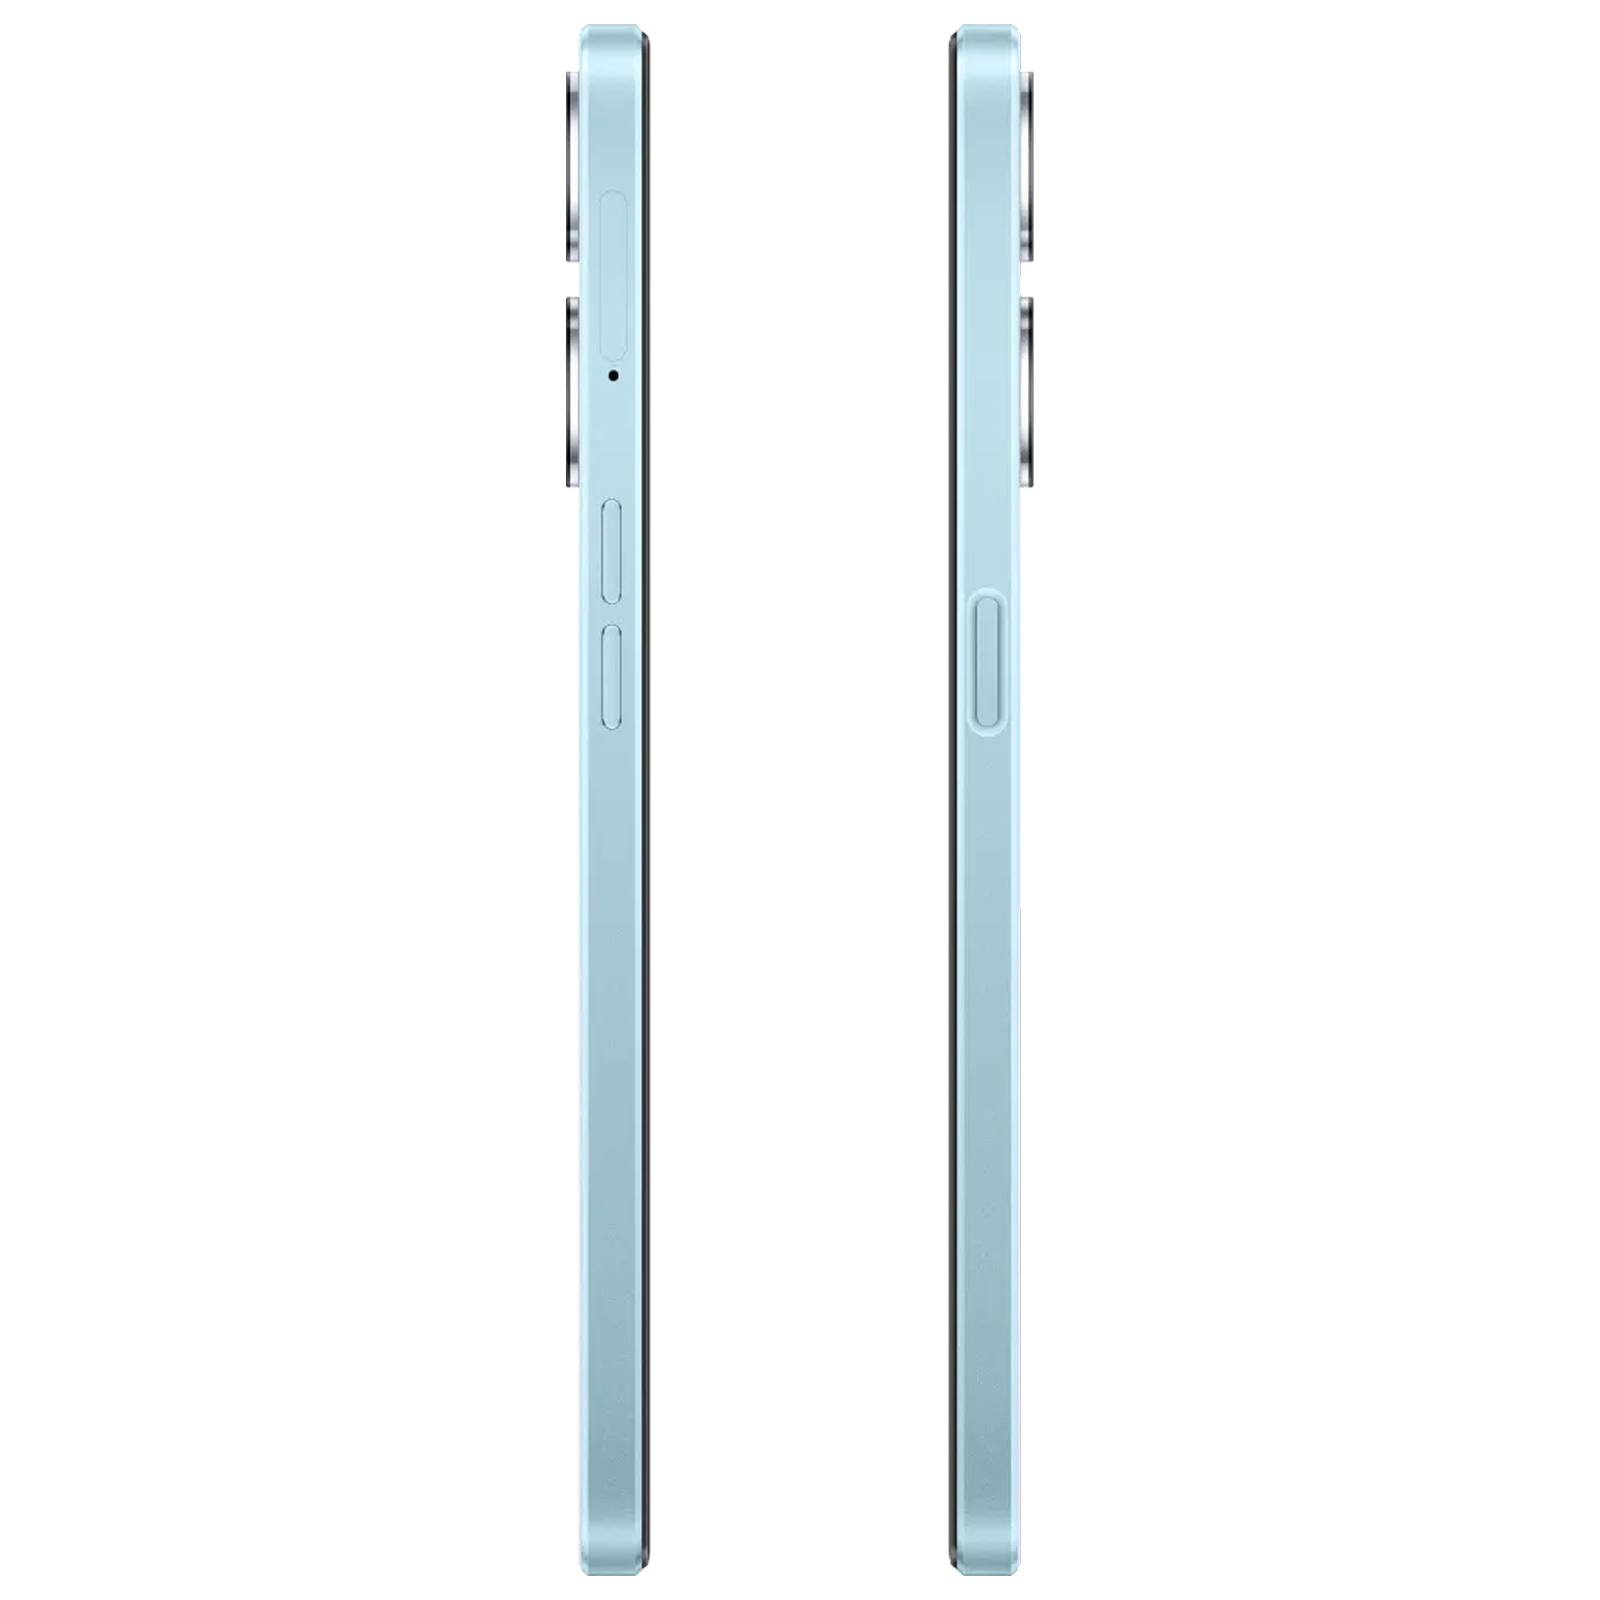 Buy Oppo A78 5G (8GB RAM, 128GB, Glowing Blue) Online - Croma